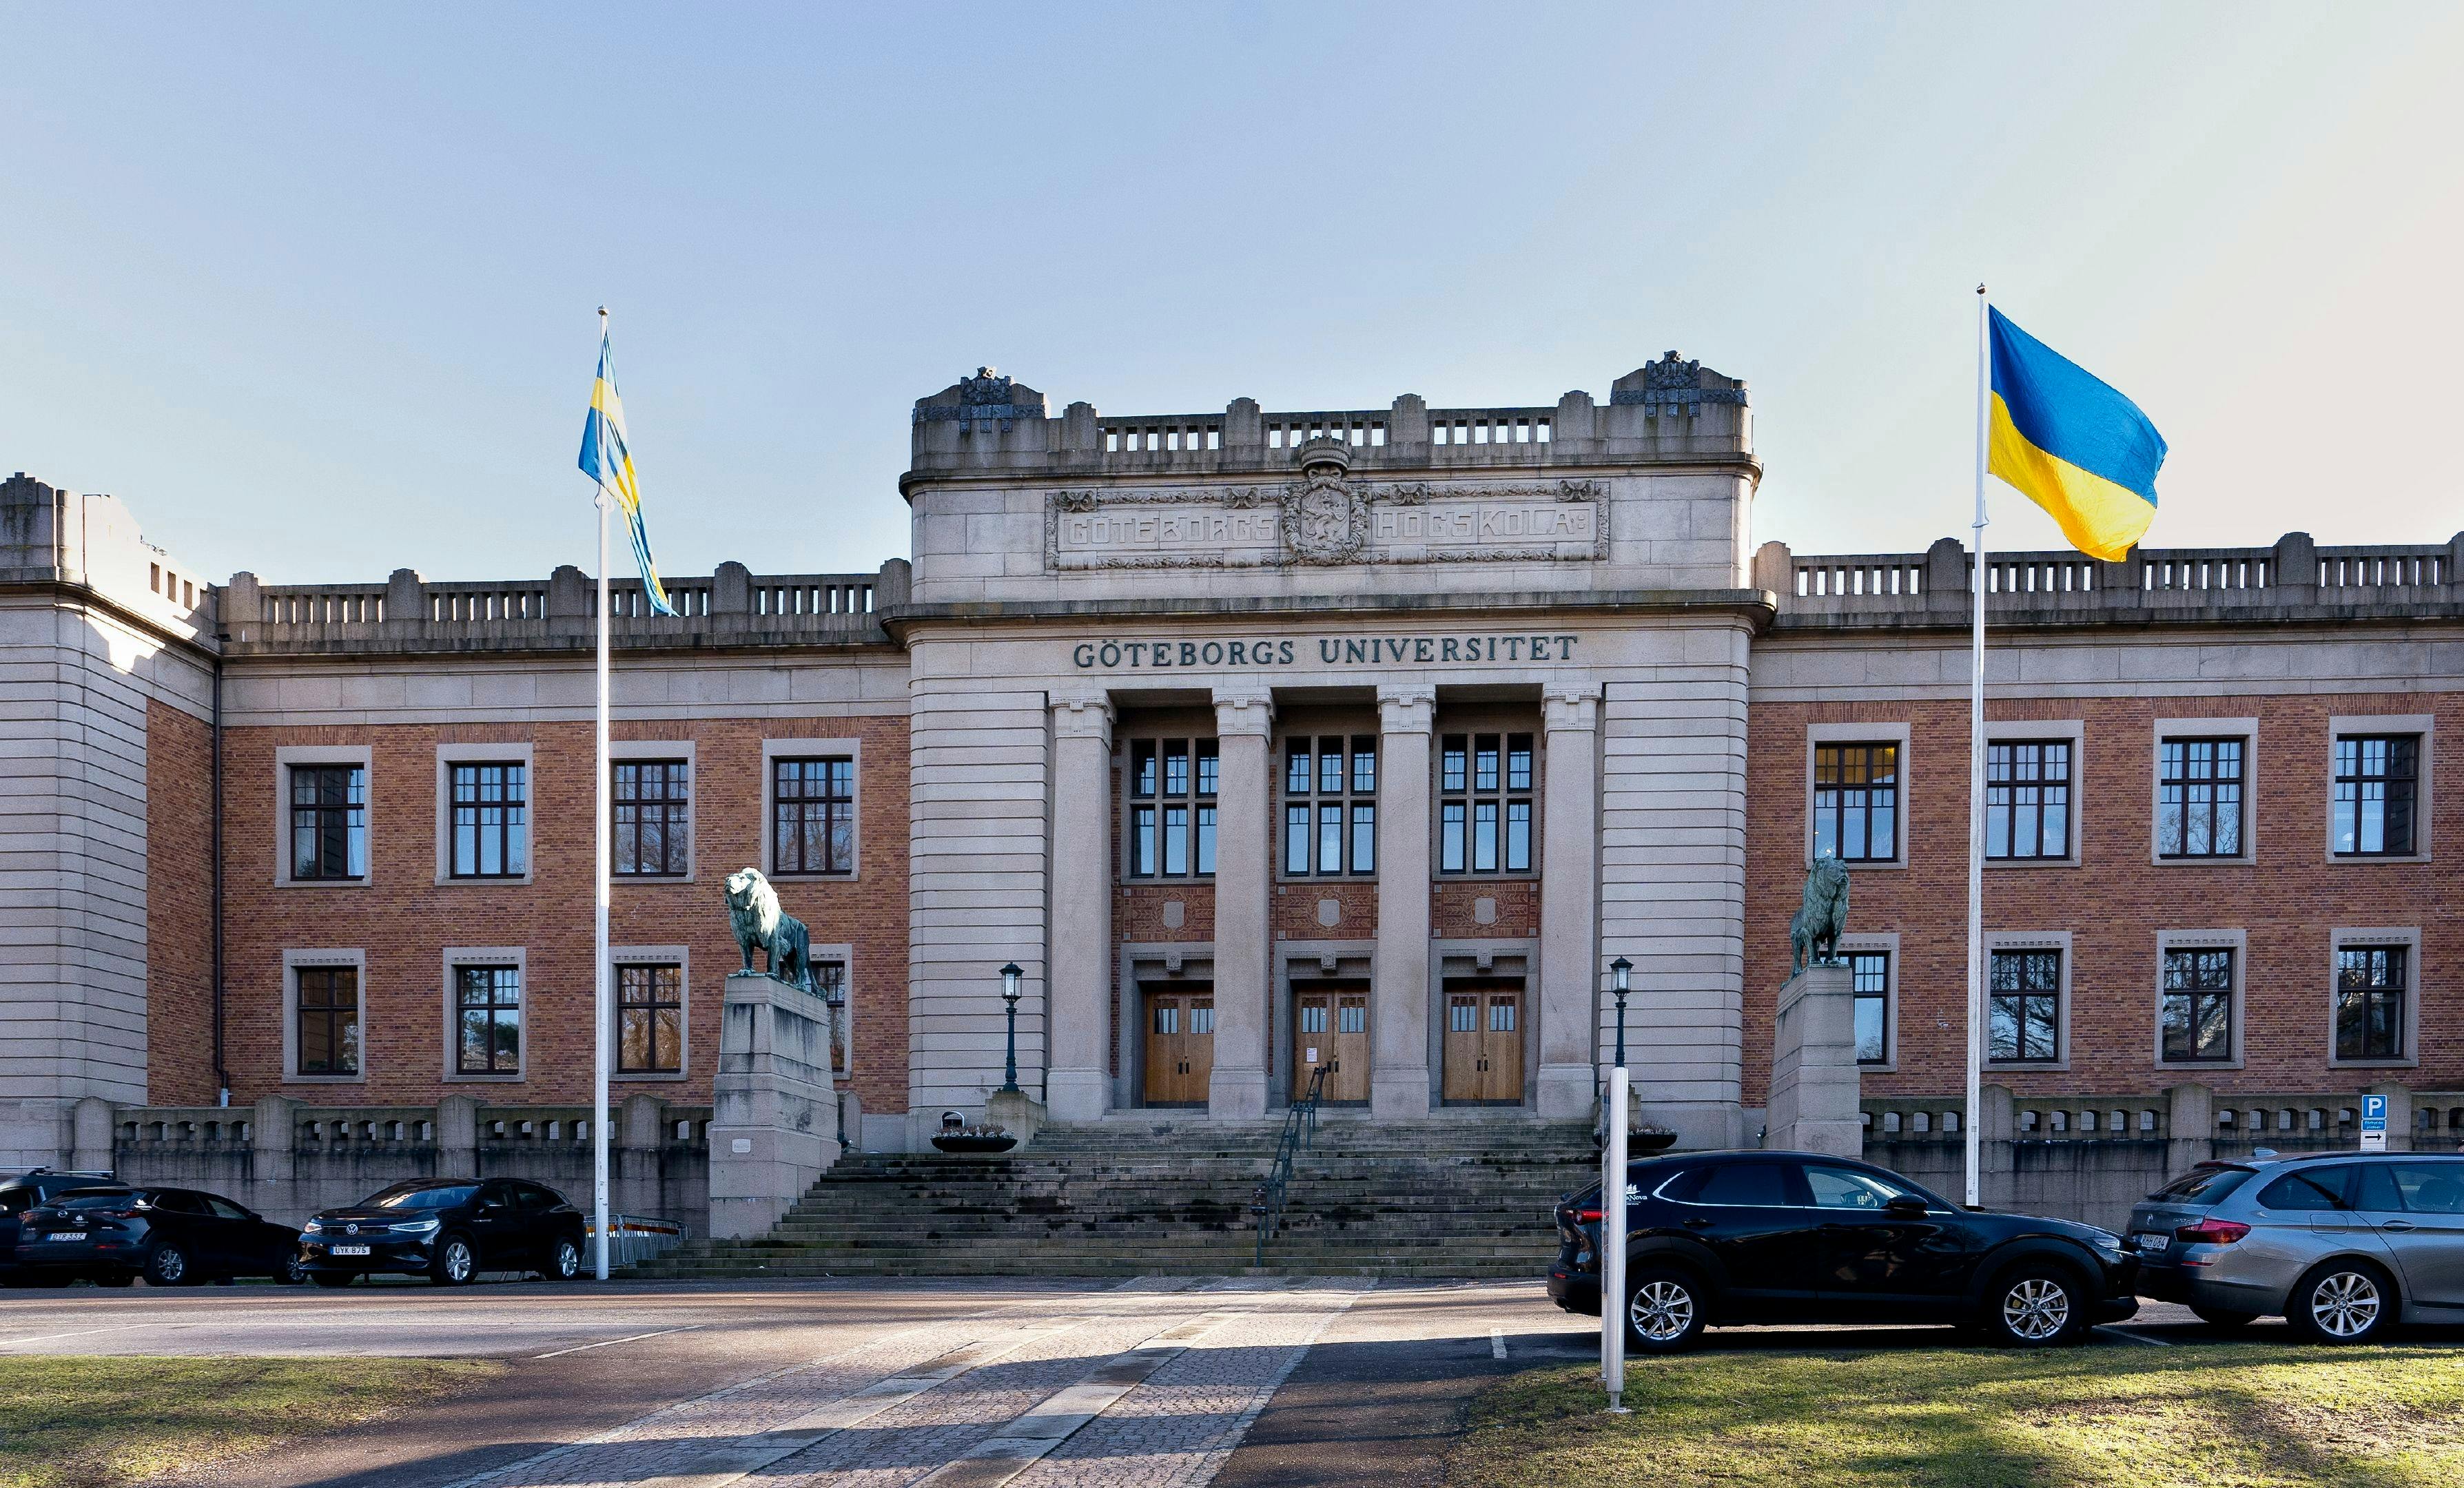 University of Gothenburg's main building.